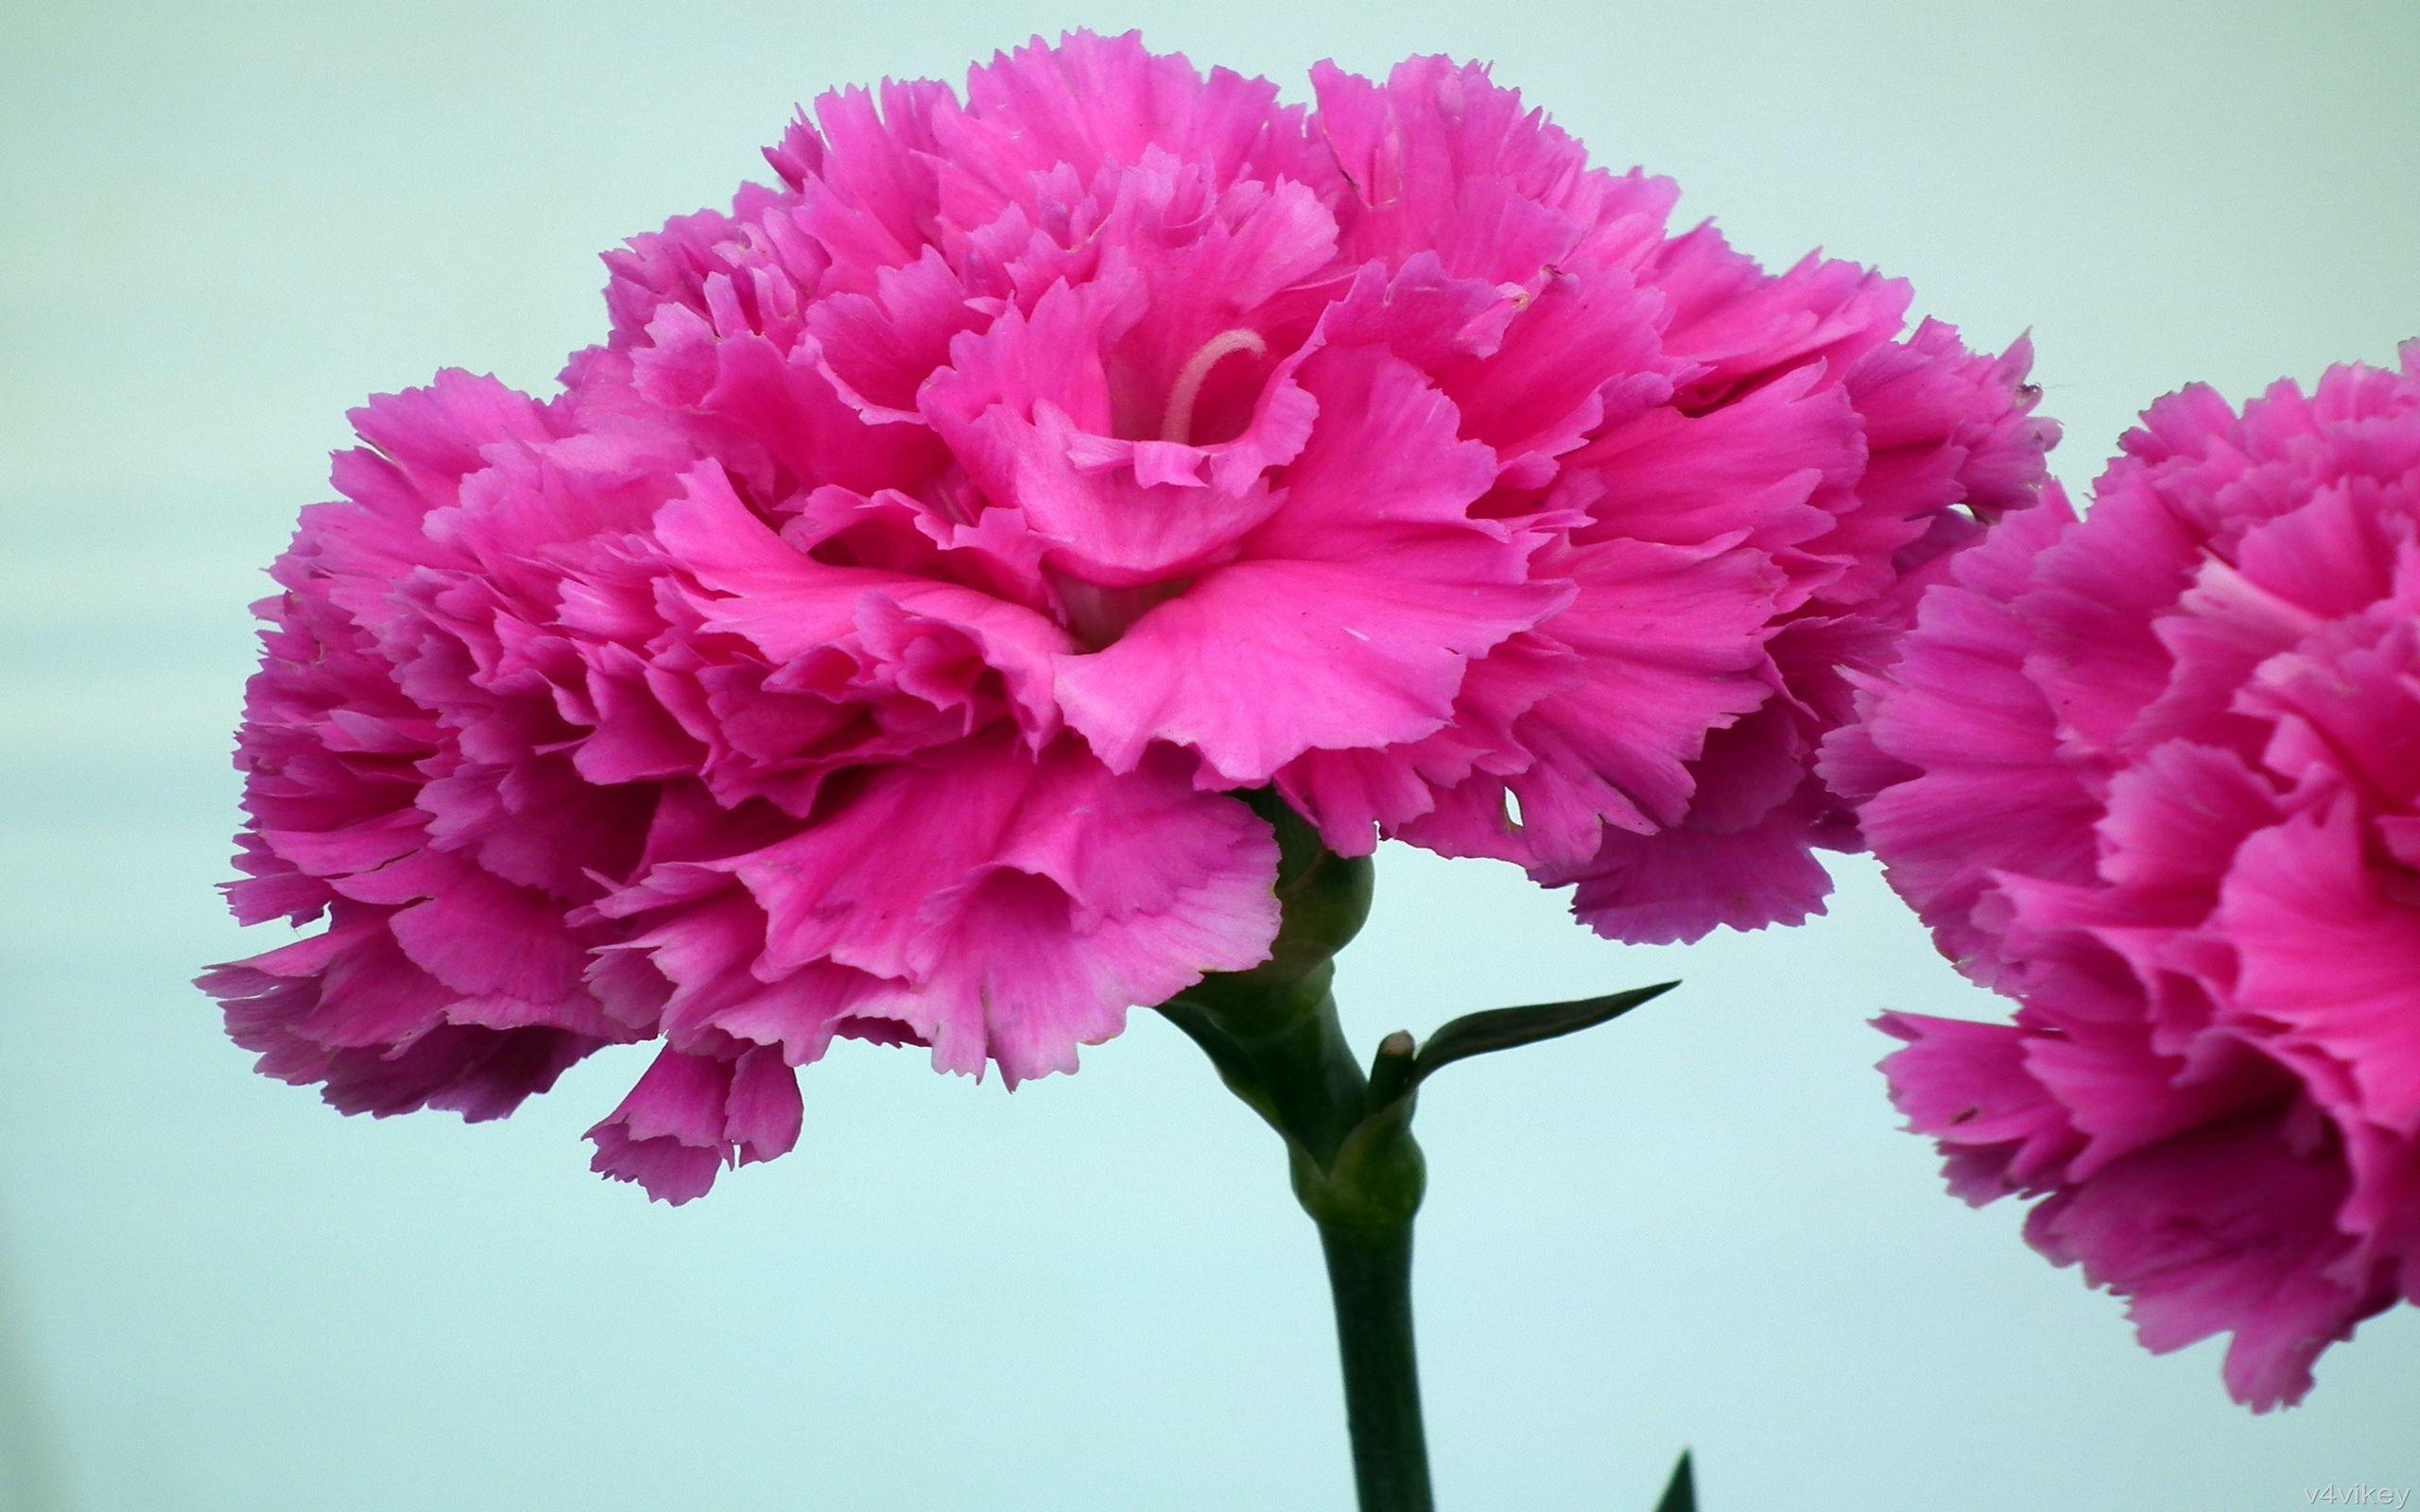 Carnation Flower Wallpapers - Top Free Carnation Flower Backgrounds ...